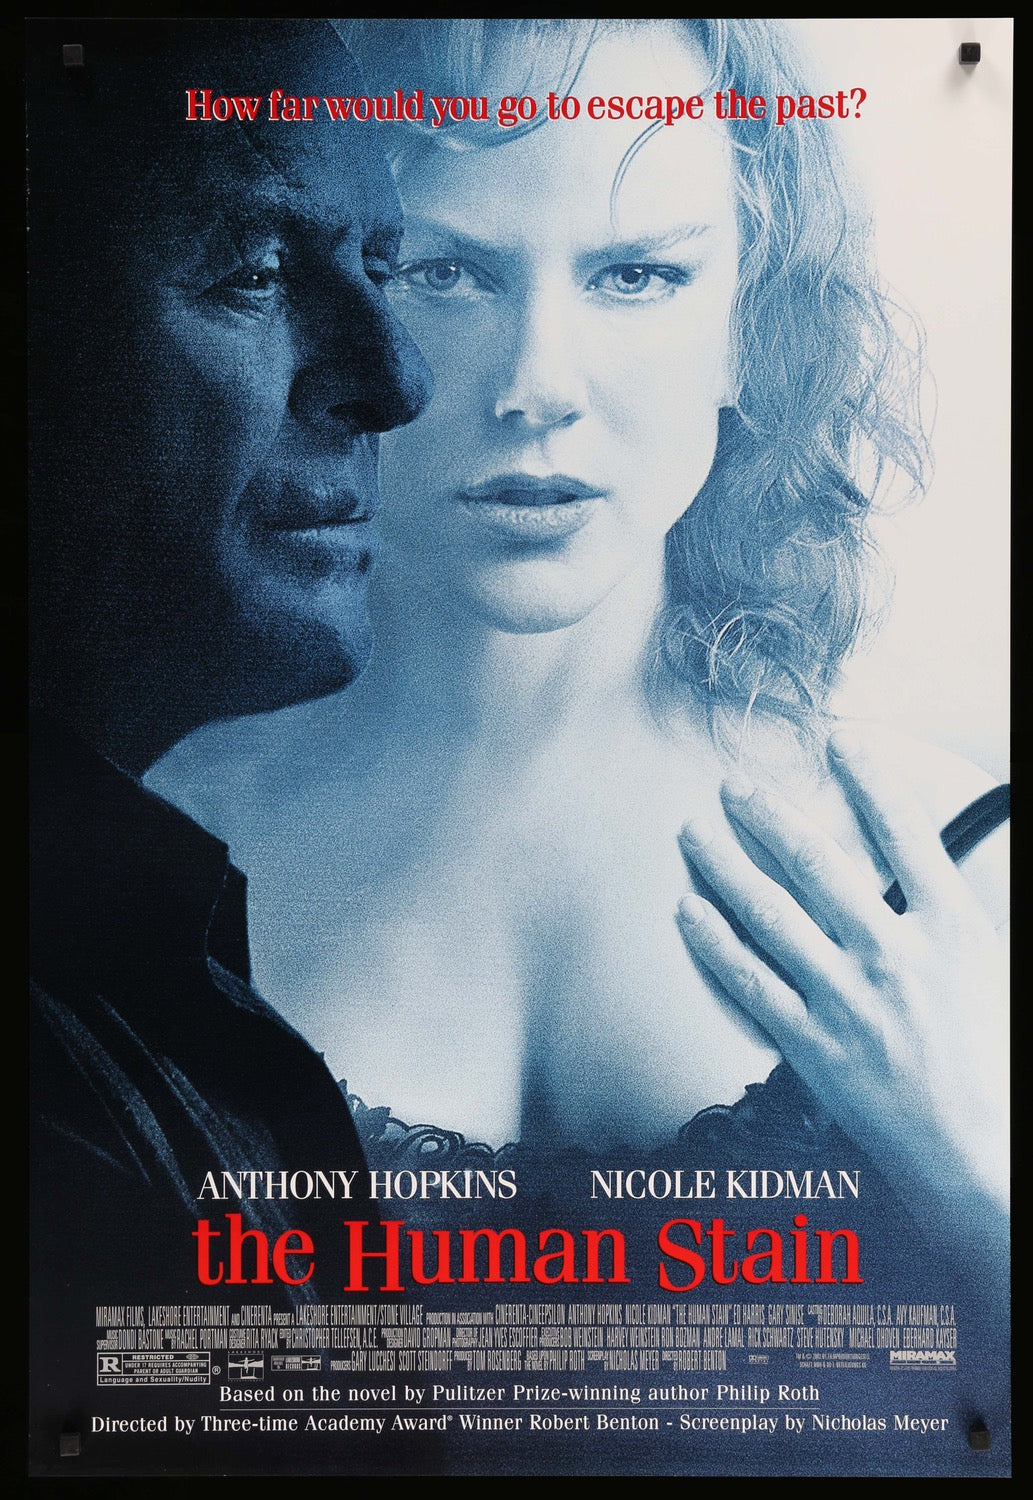 Human Stain (2003) original movie poster for sale at Original Film Art